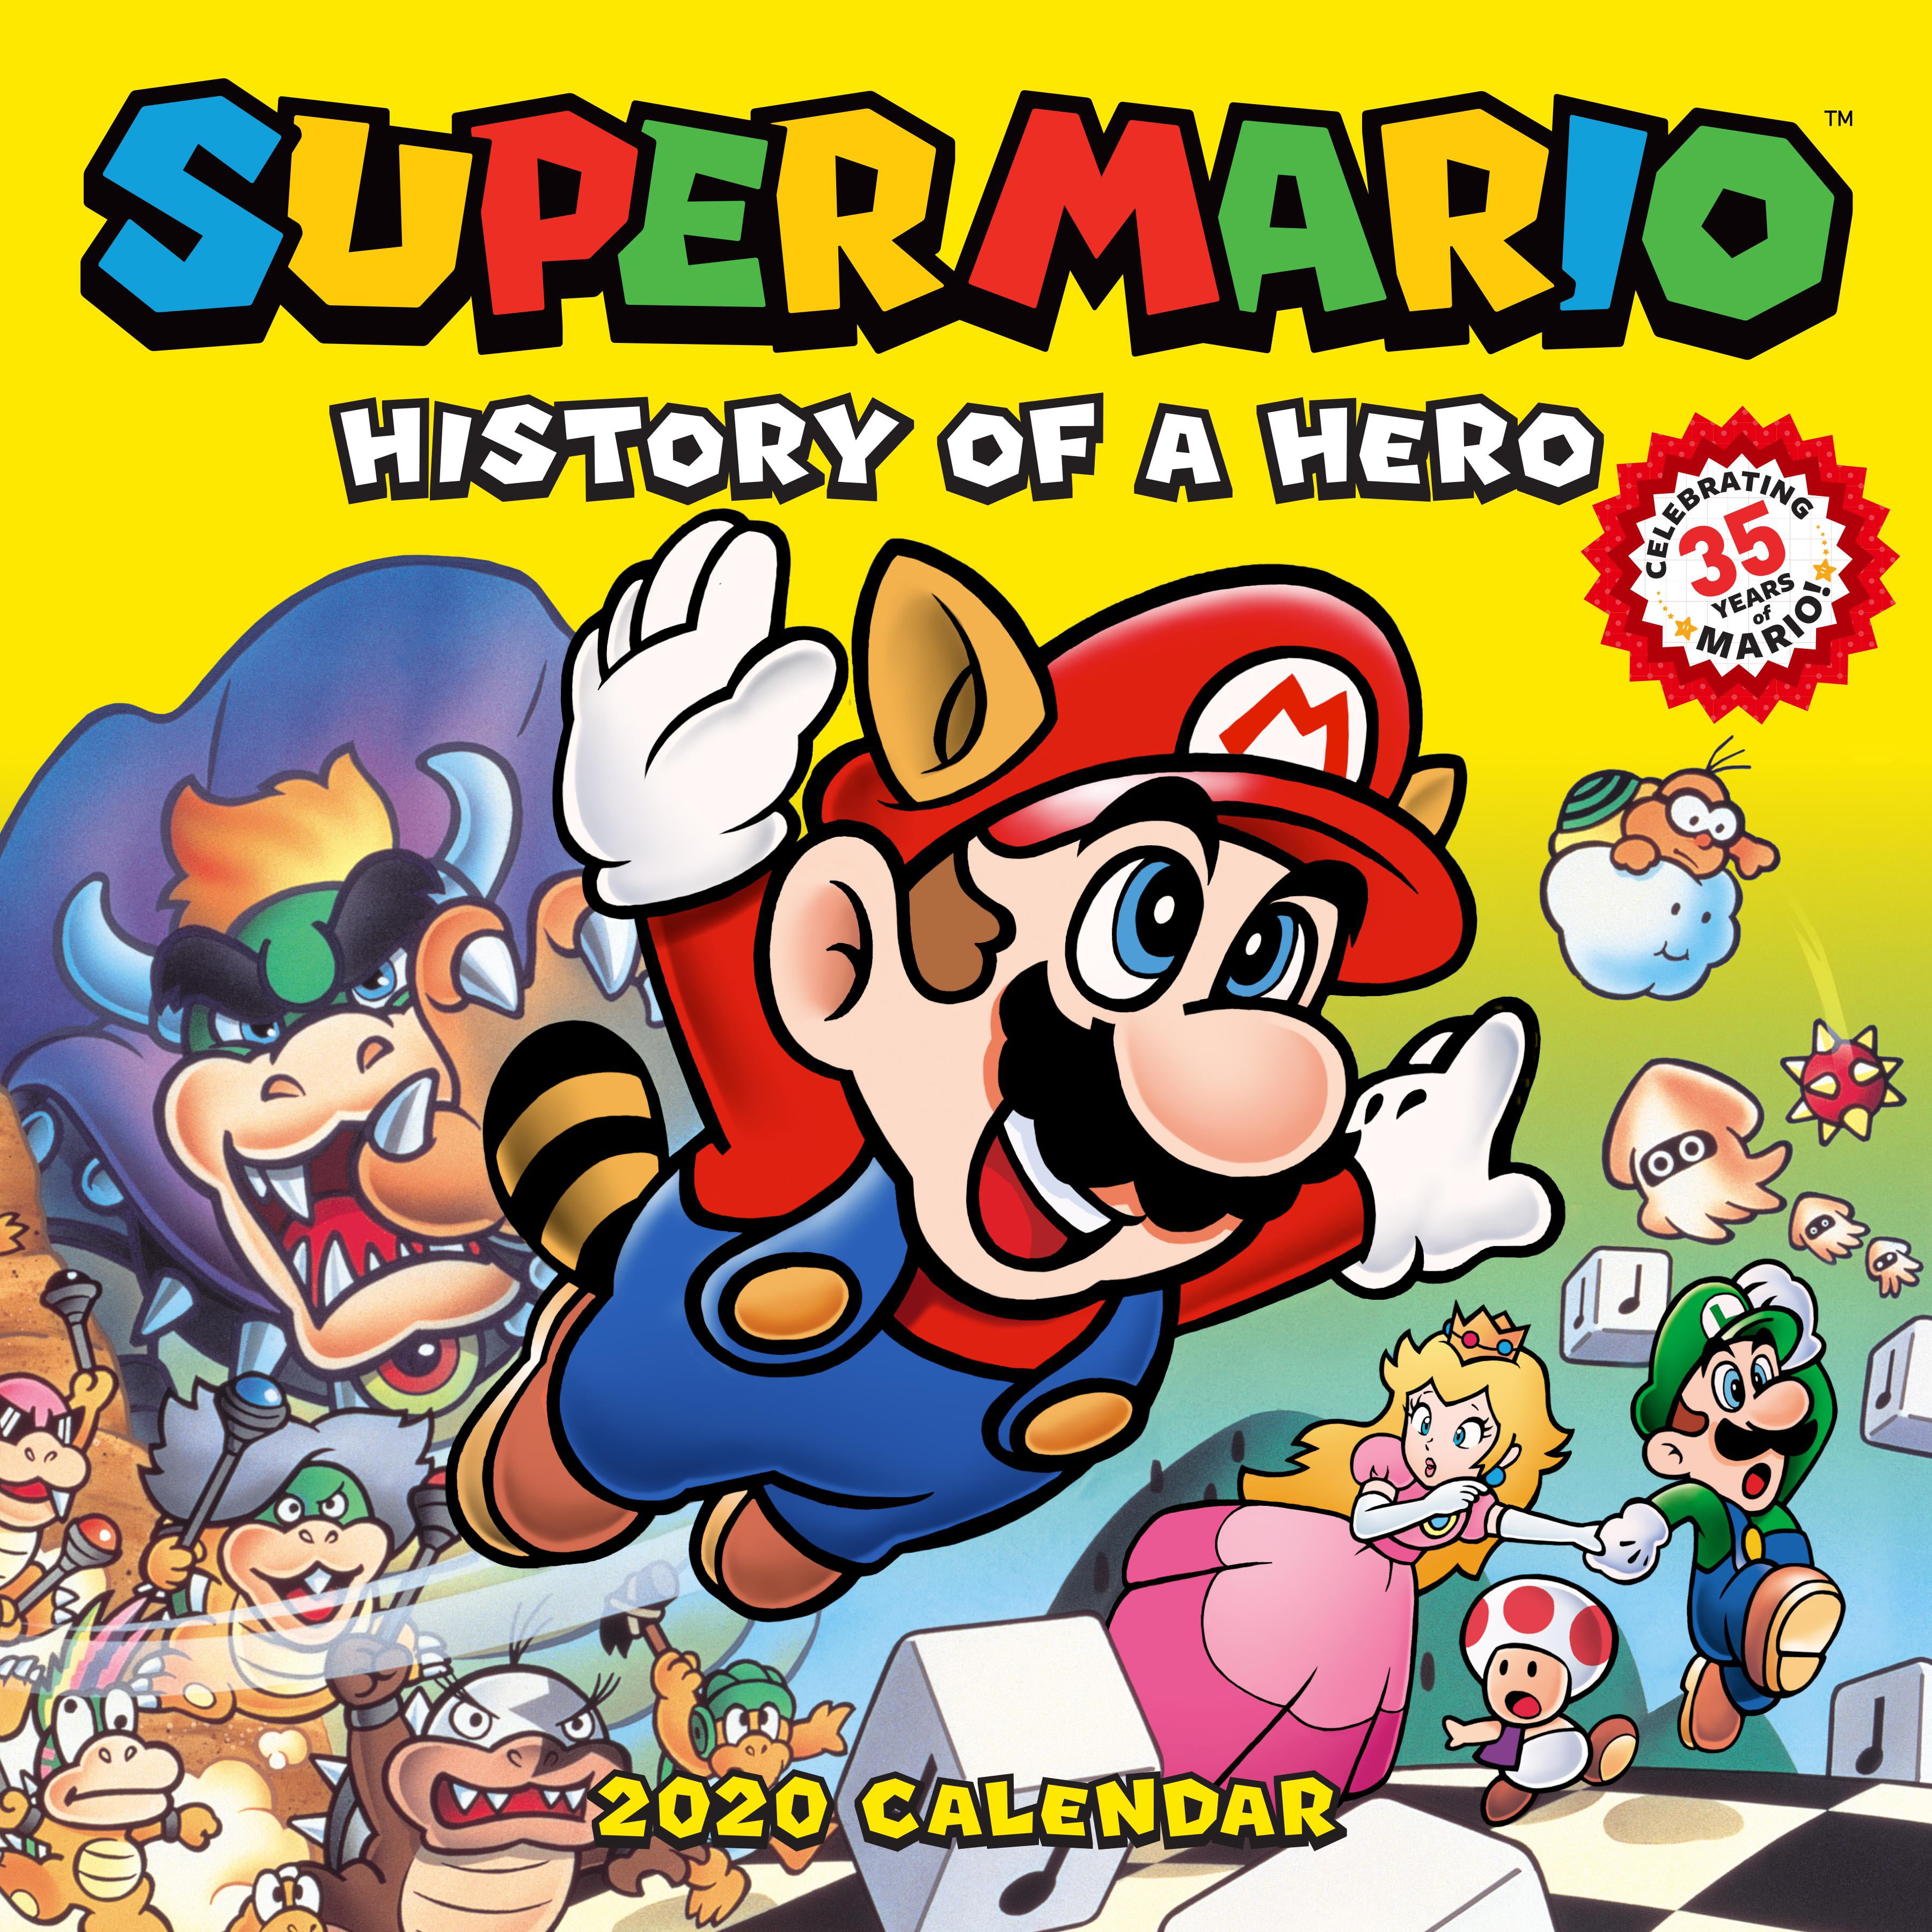 Super Mario Retro 2020 Wall Calendar: History of a Hero (Other